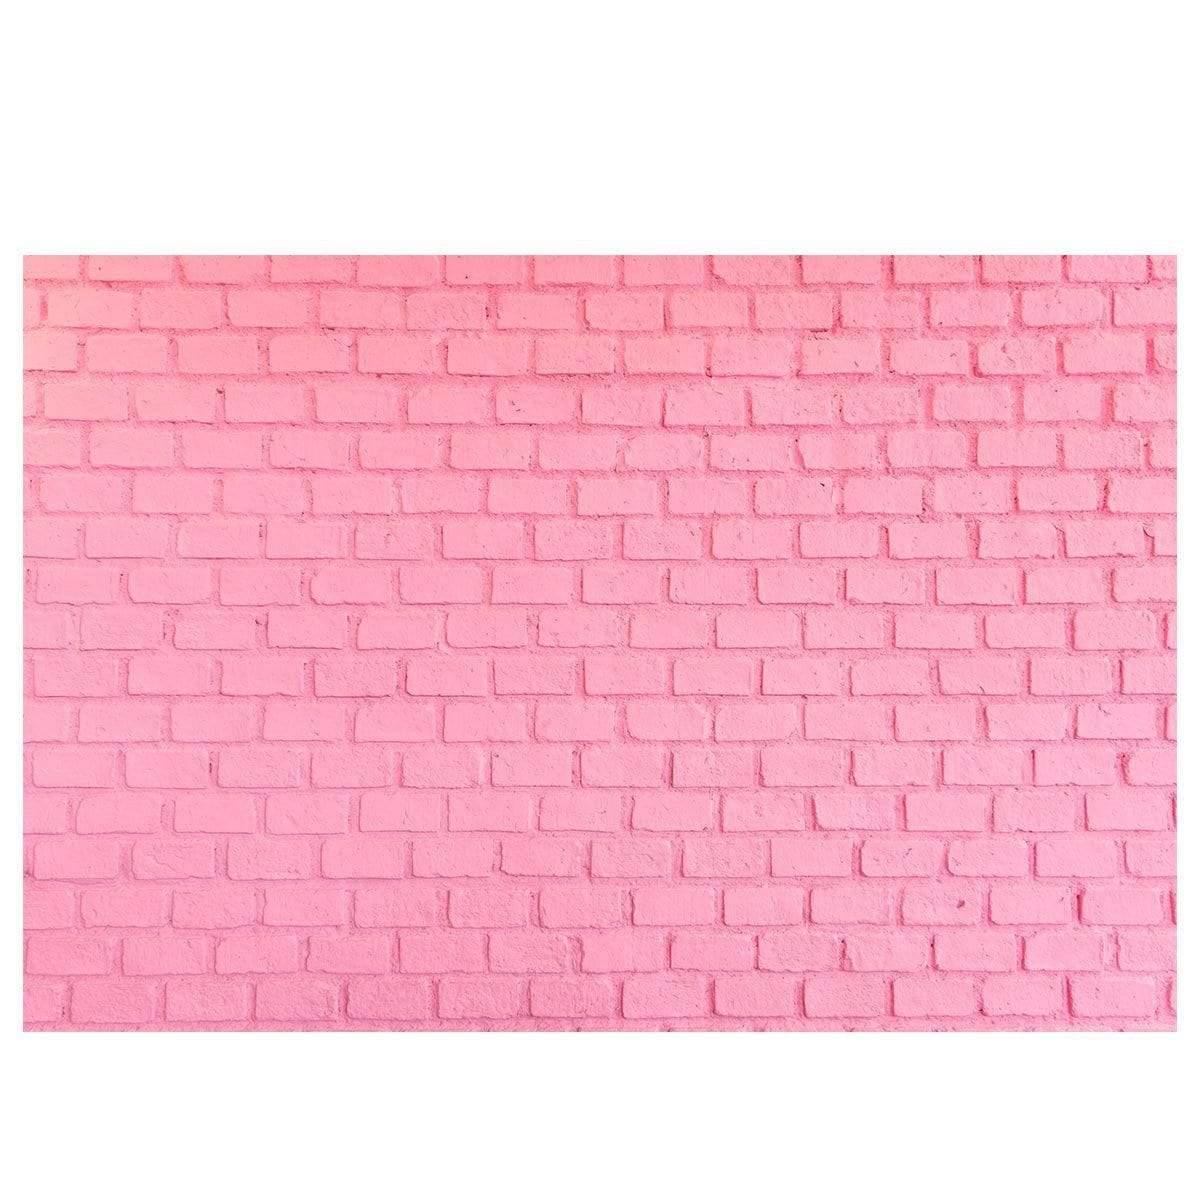 Allenjoy Pink Brick Walls Maiden Heart Photography Backdrop - Allenjoystudio